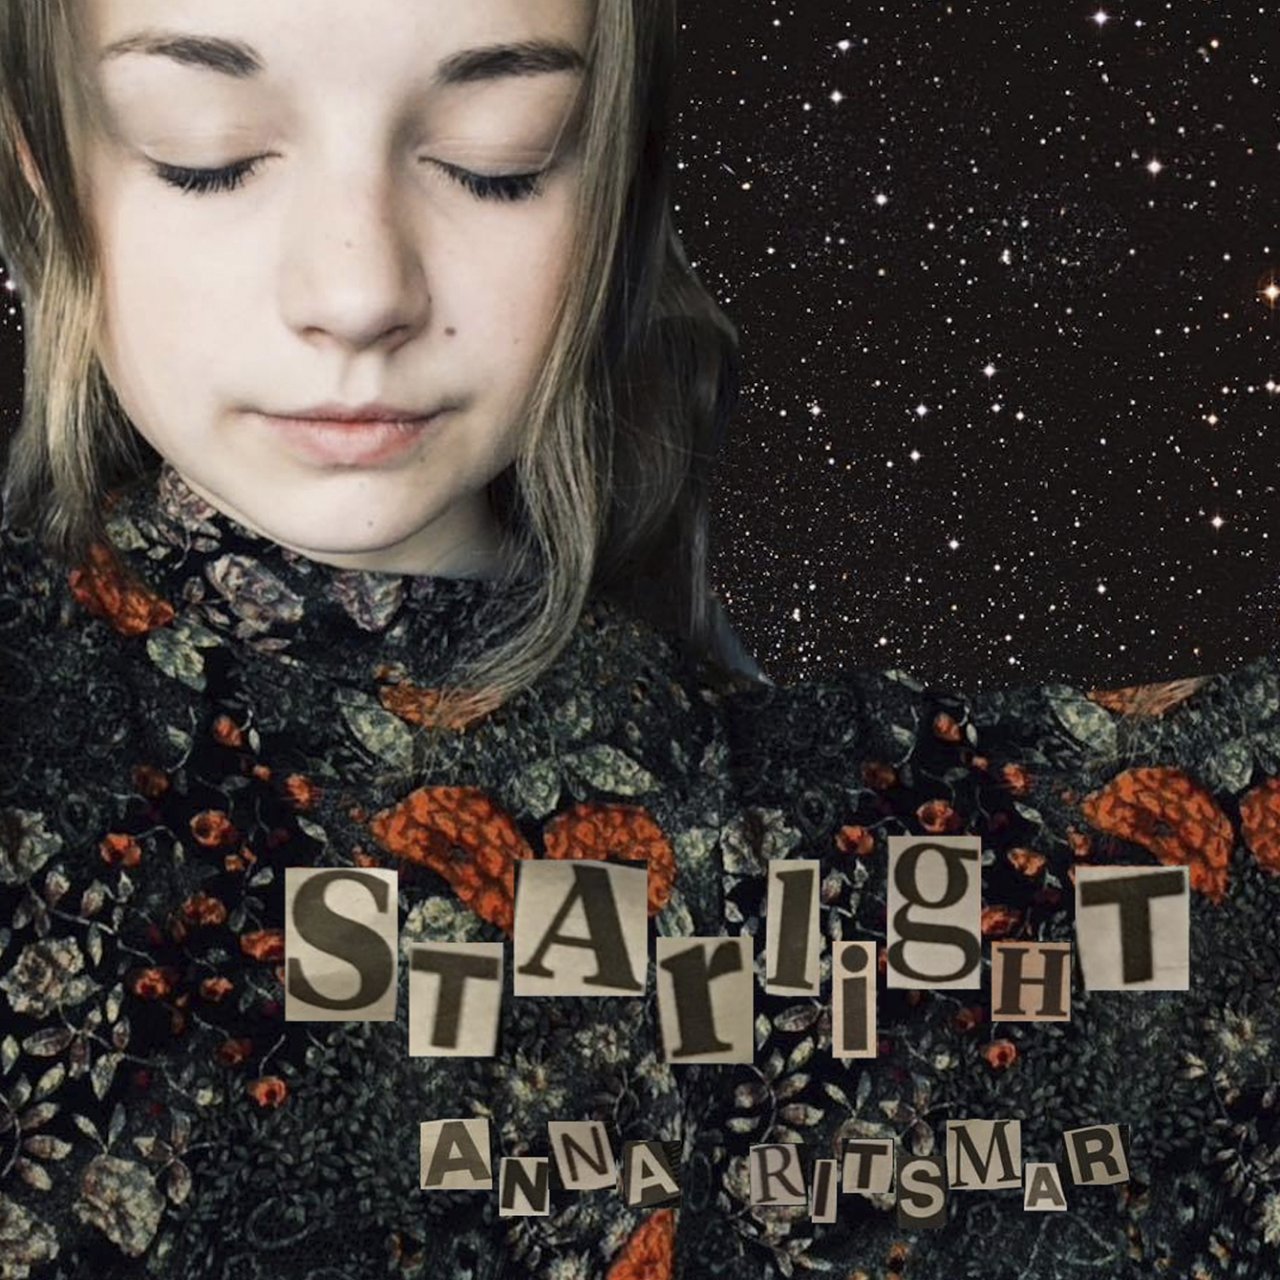 Anna Ritsmar Starlight cover artwork